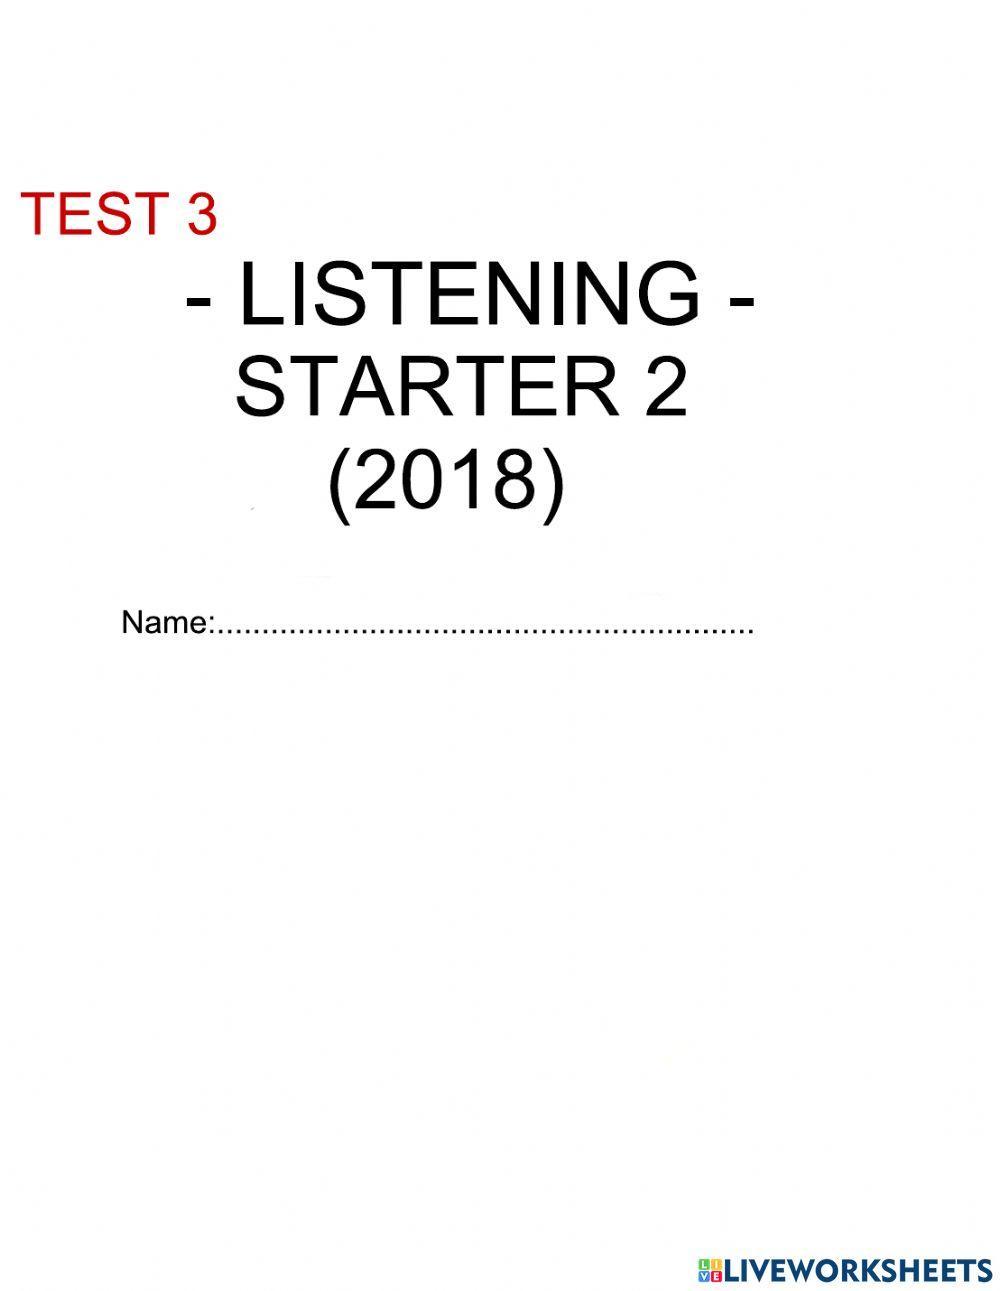 Starter 2 (2018) - Test 3 - Listening